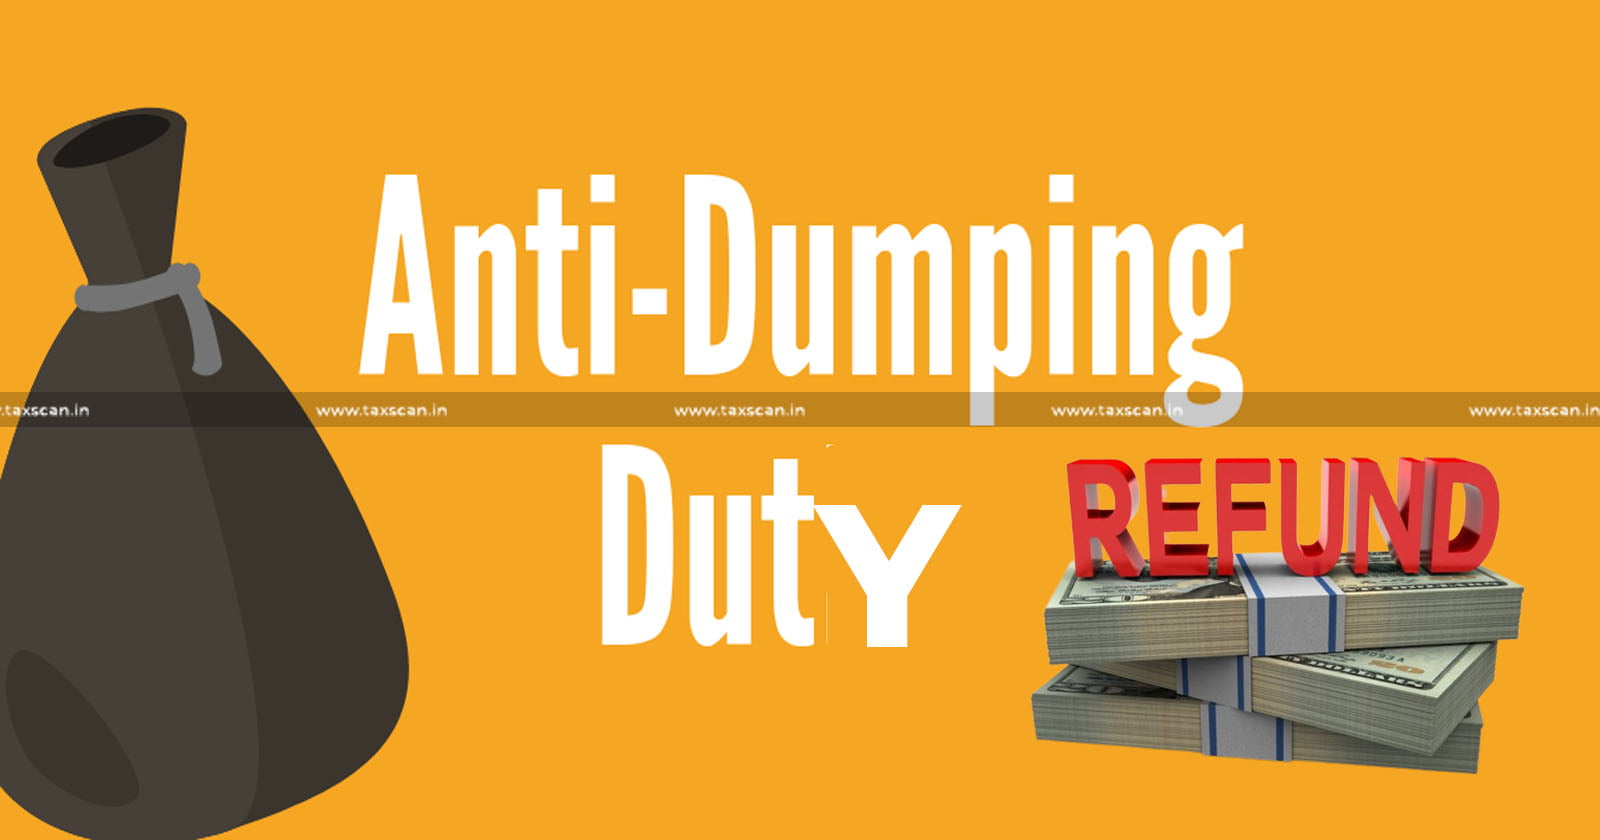 Gujarat High Court - Anti-dumping Duty - Refund on Anti-dumping Duty - Refund - Anti-Dumping Duty Notification - Gujarat HC - Taxscan